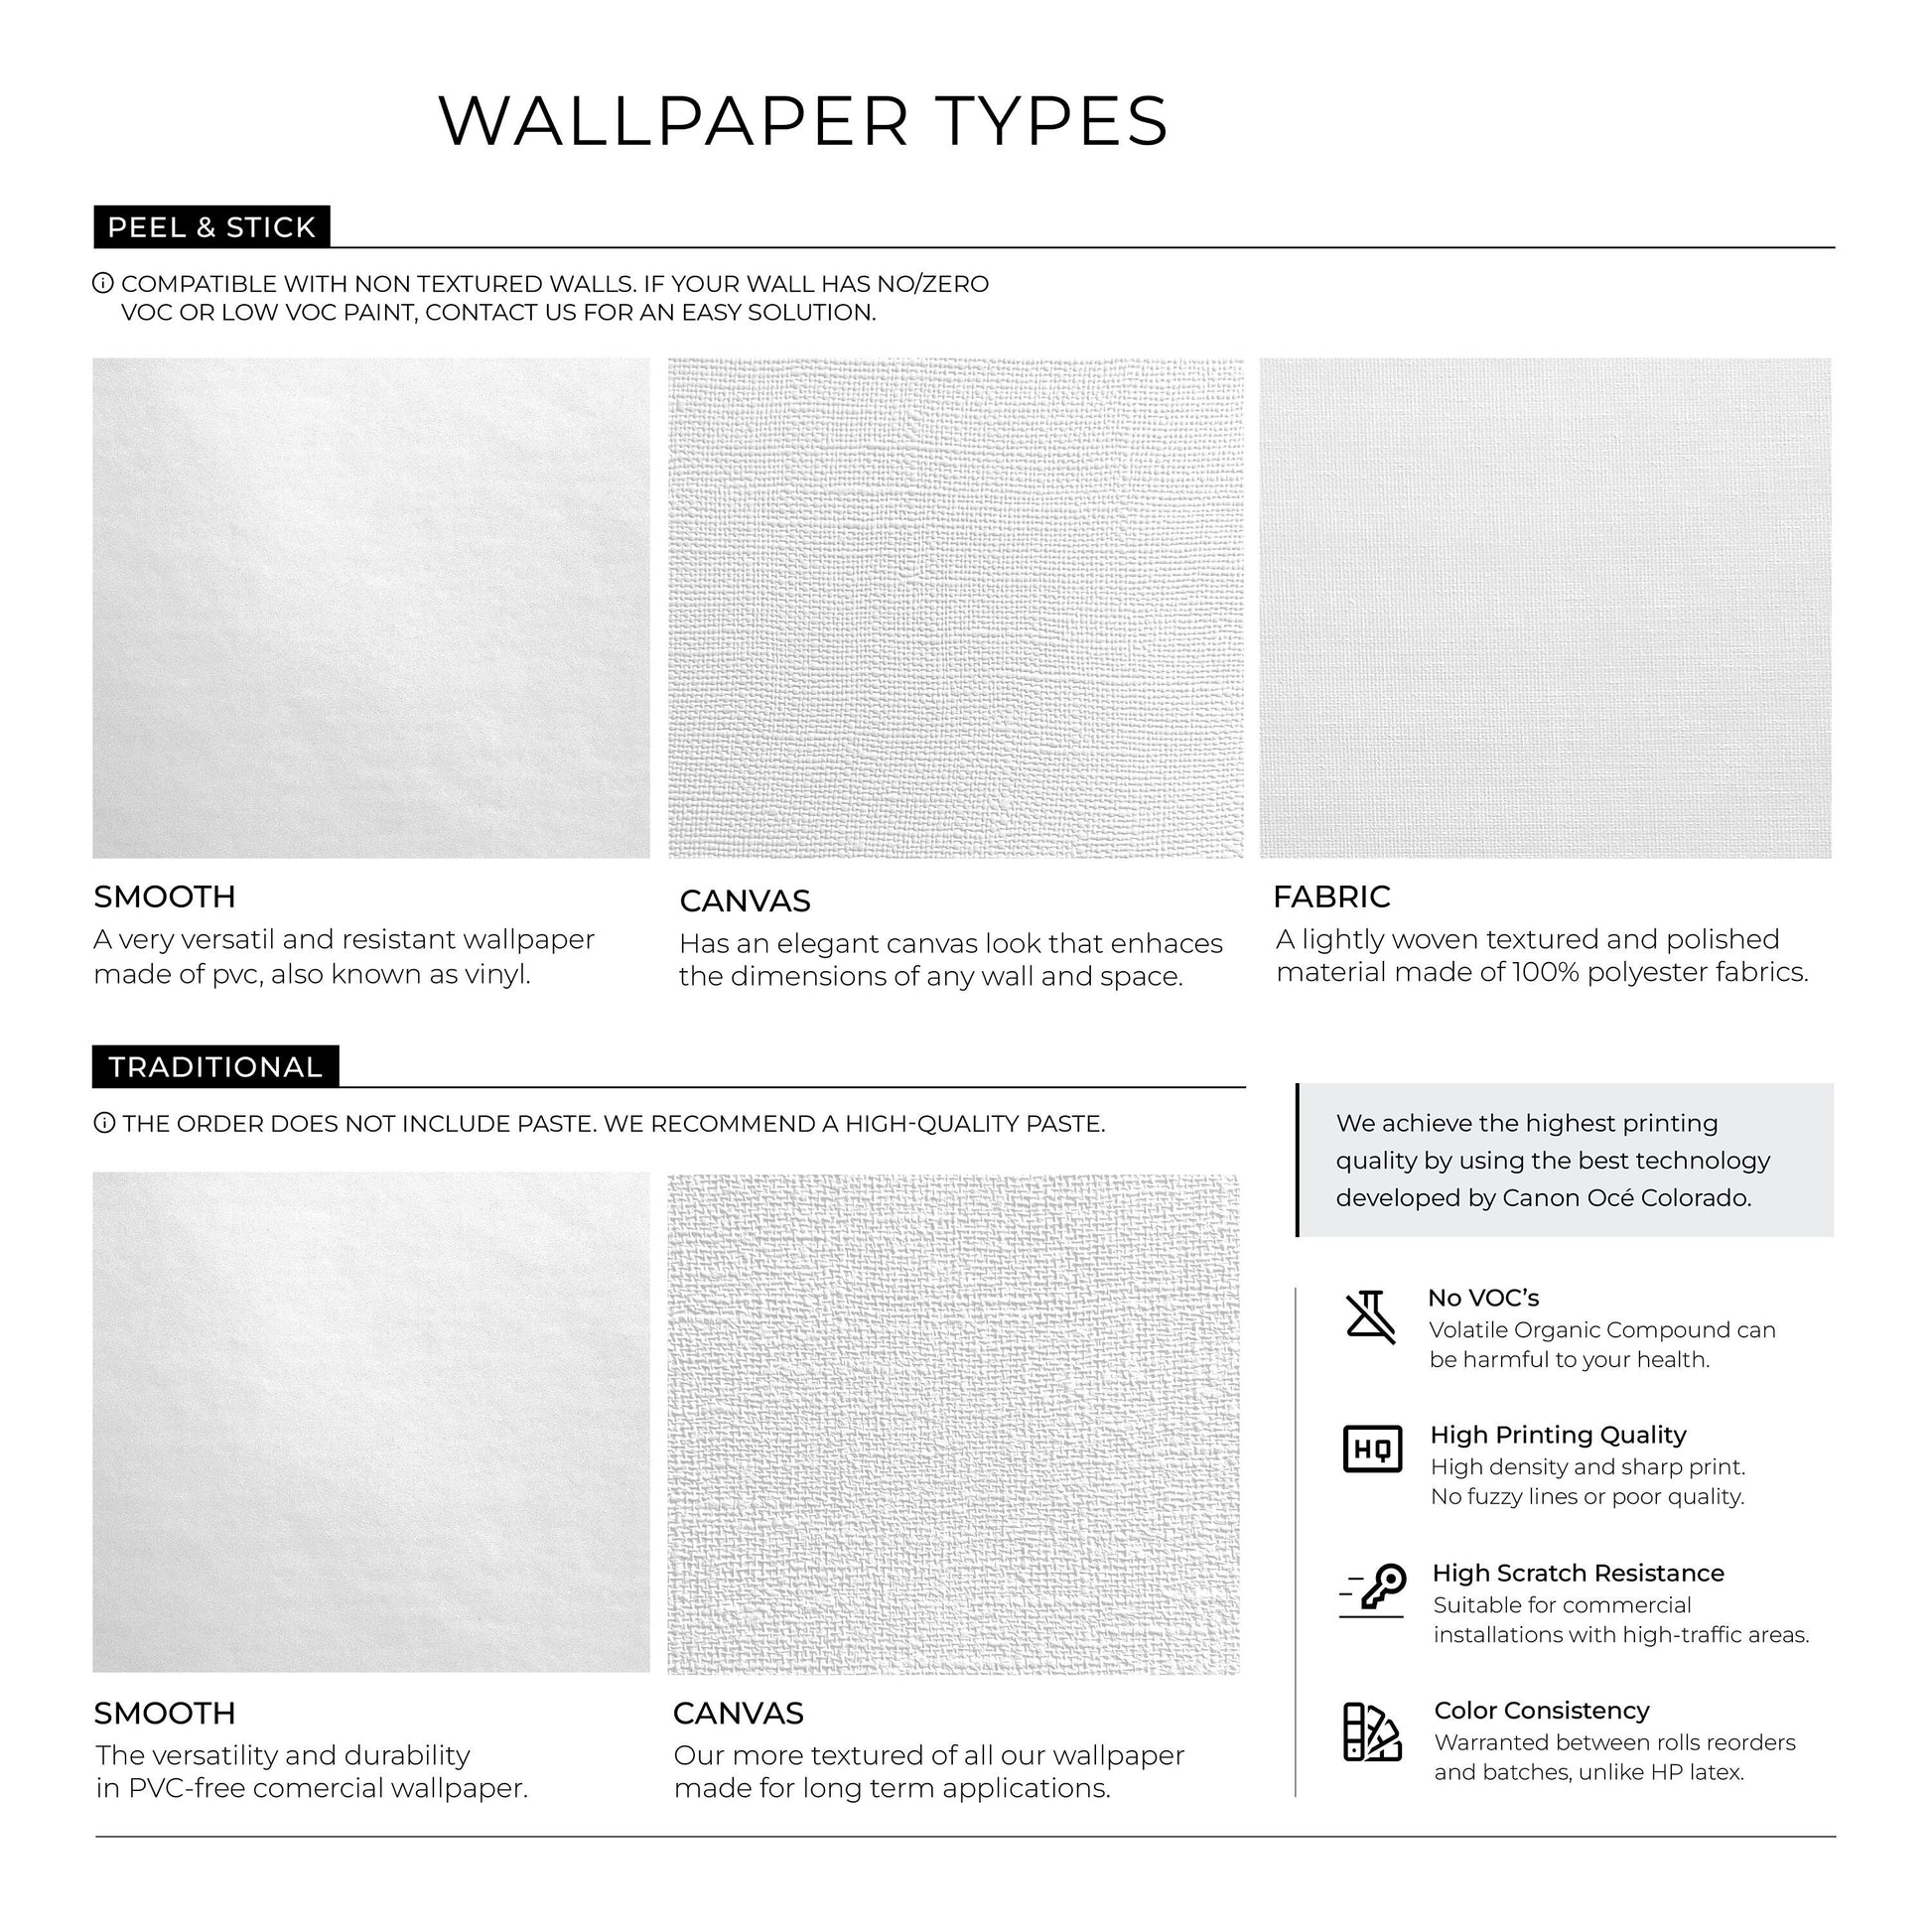 Removable Wallpaper Temporary Wallpaper Vintage Wallpaper Peel and Stick Wallpaper Wall Paper - A802